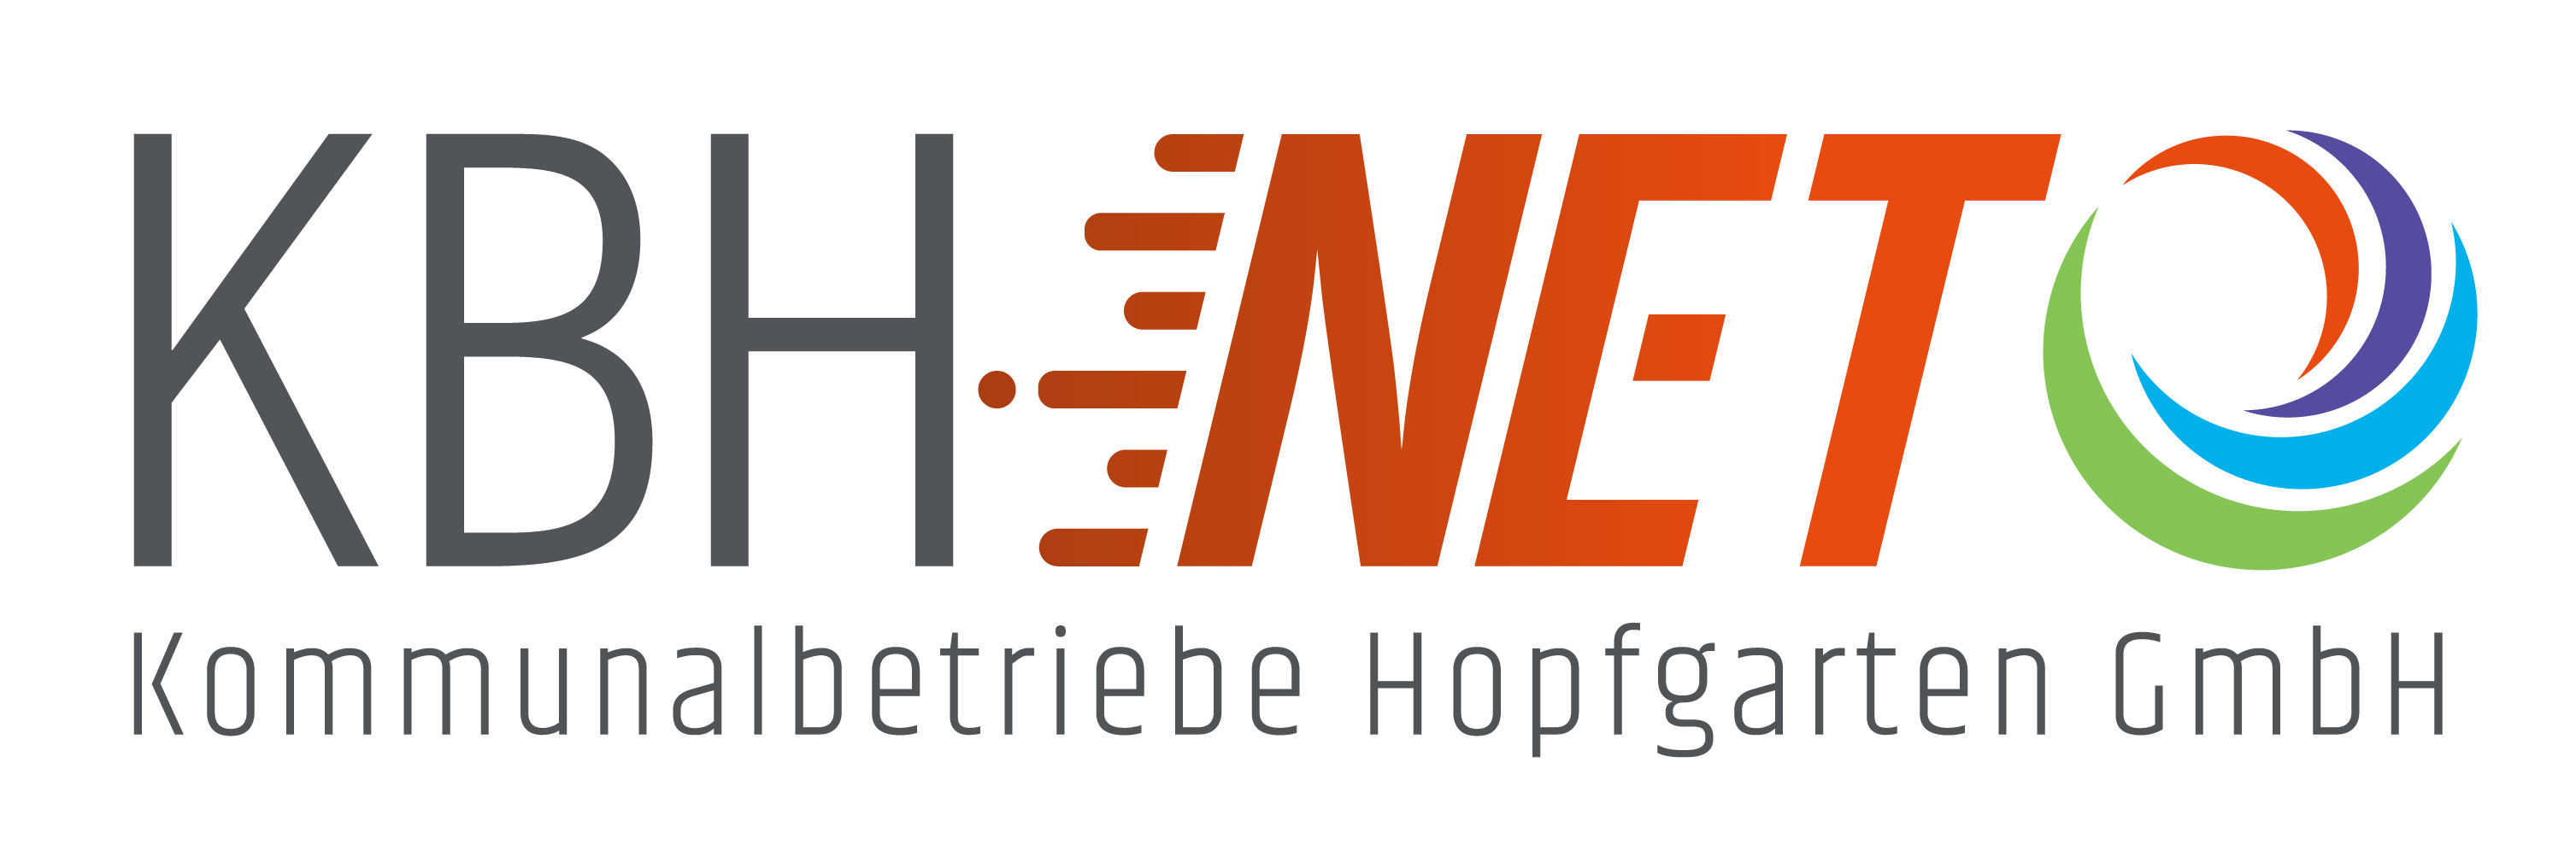 Logo Kommunalbetriebe Hopfgarten